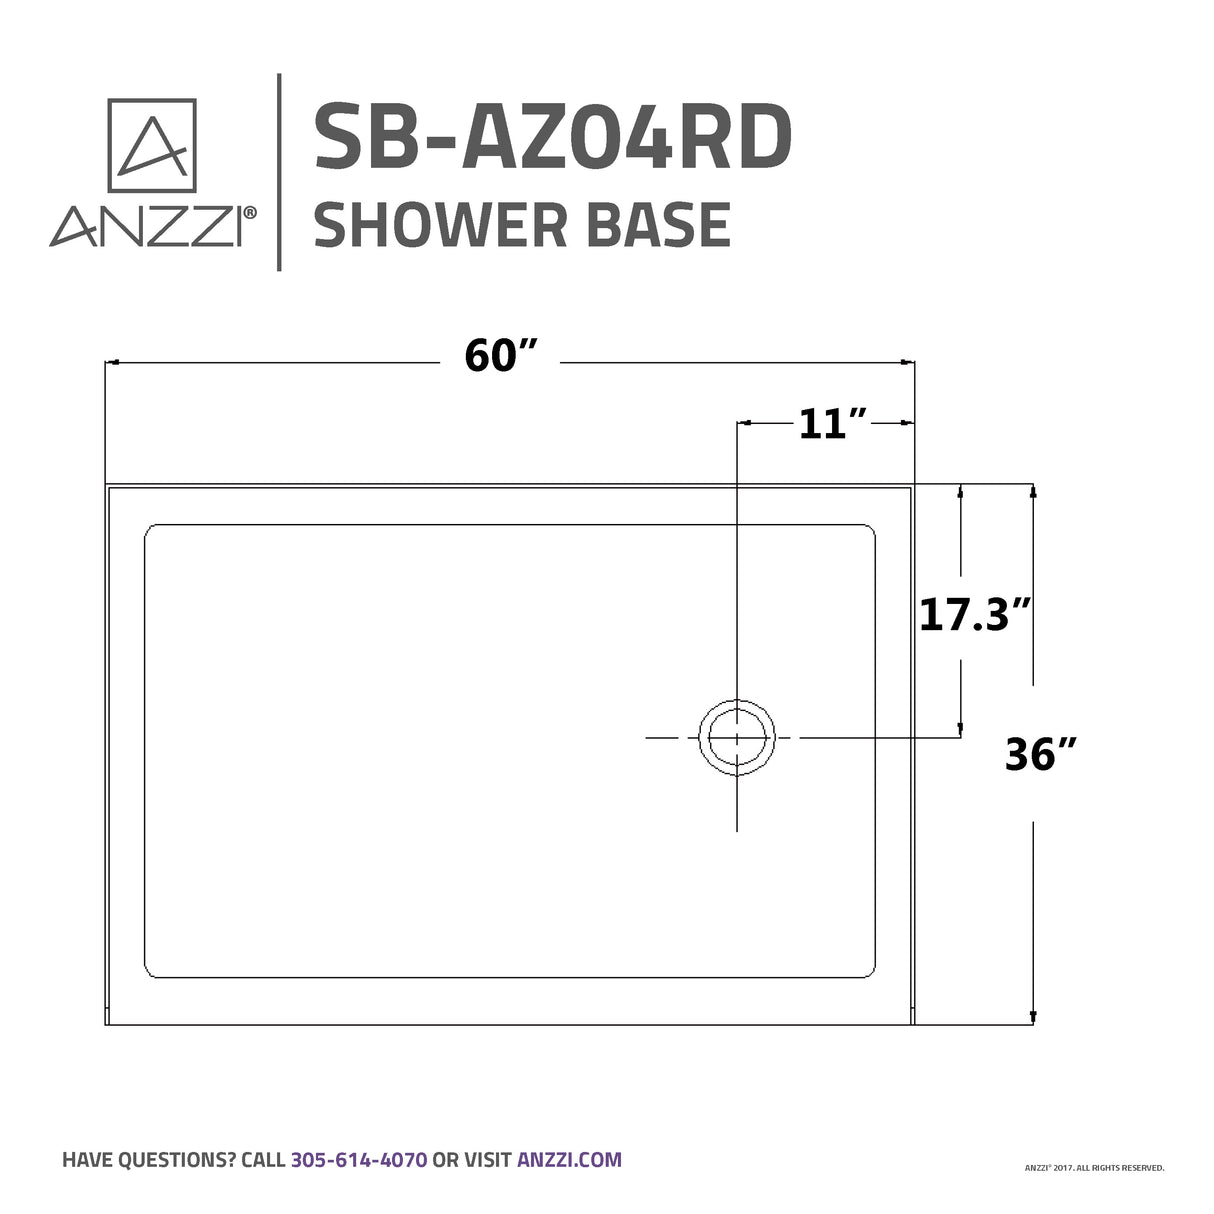 ANZZI SB-AZ04RD Tier 36 x 60  in. Right Drain Single Threshold Shower Base in White